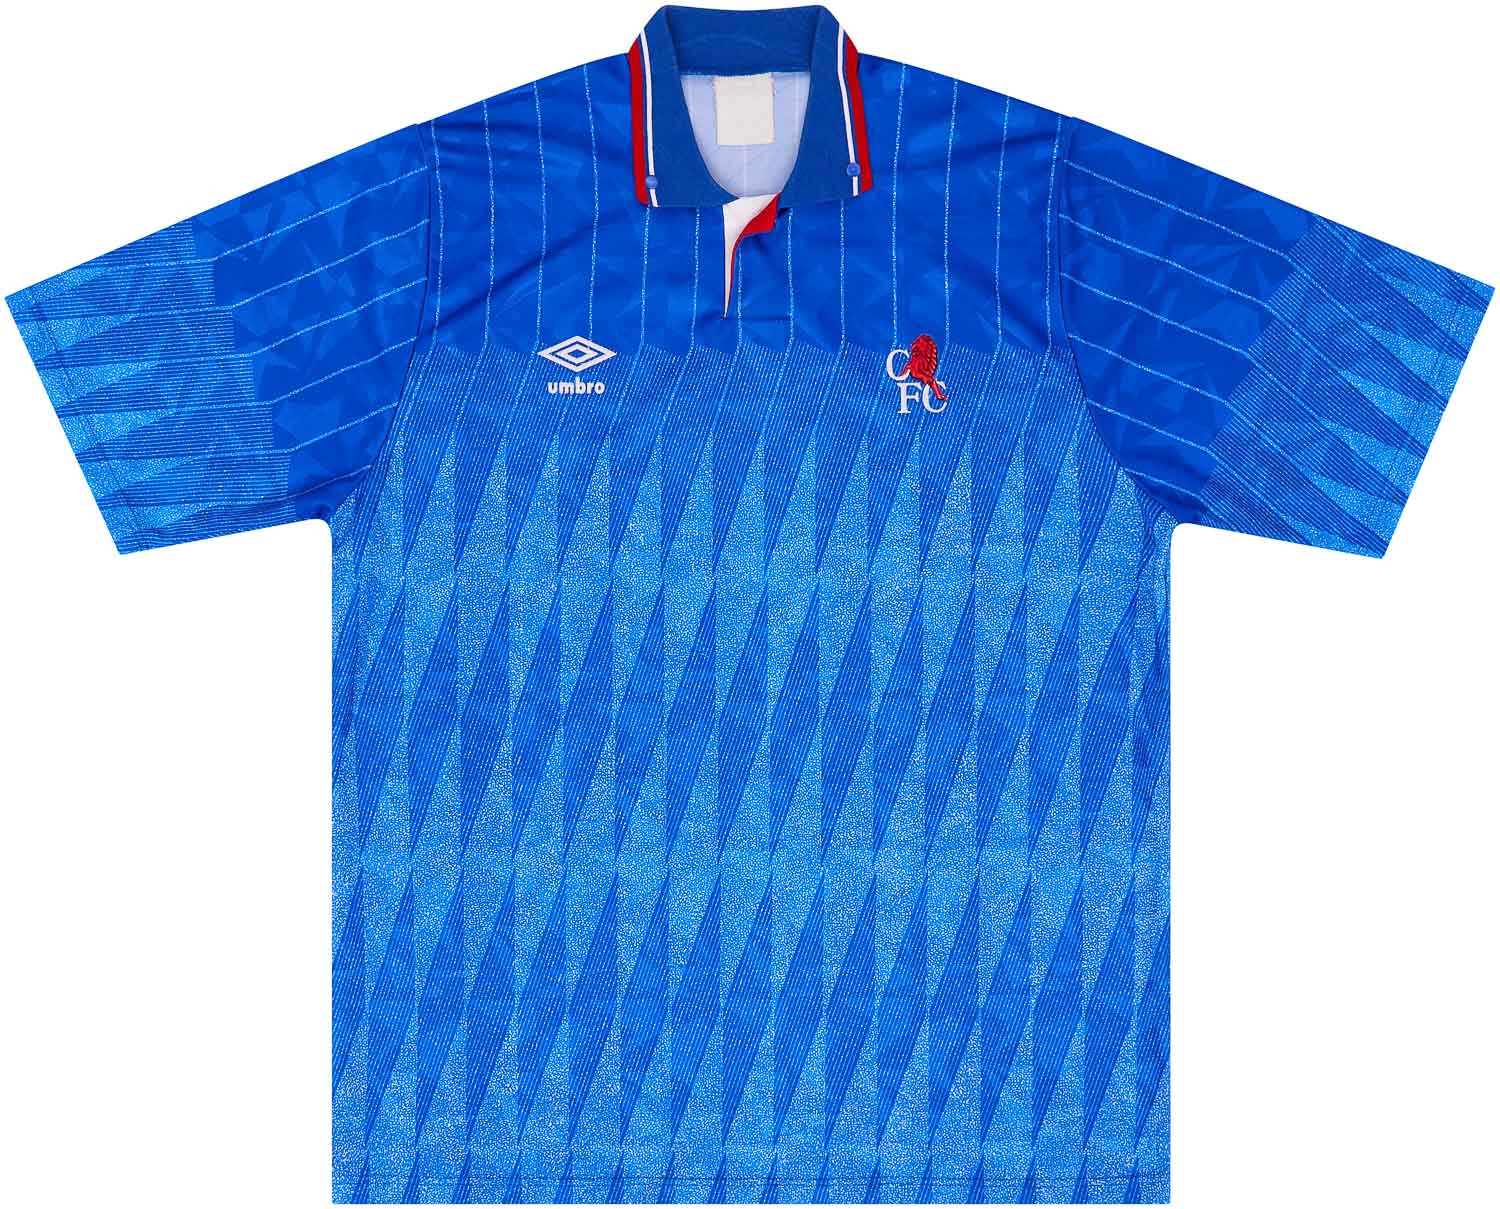 1989-91 Chelsea Home Shirt - 9/10 - ()